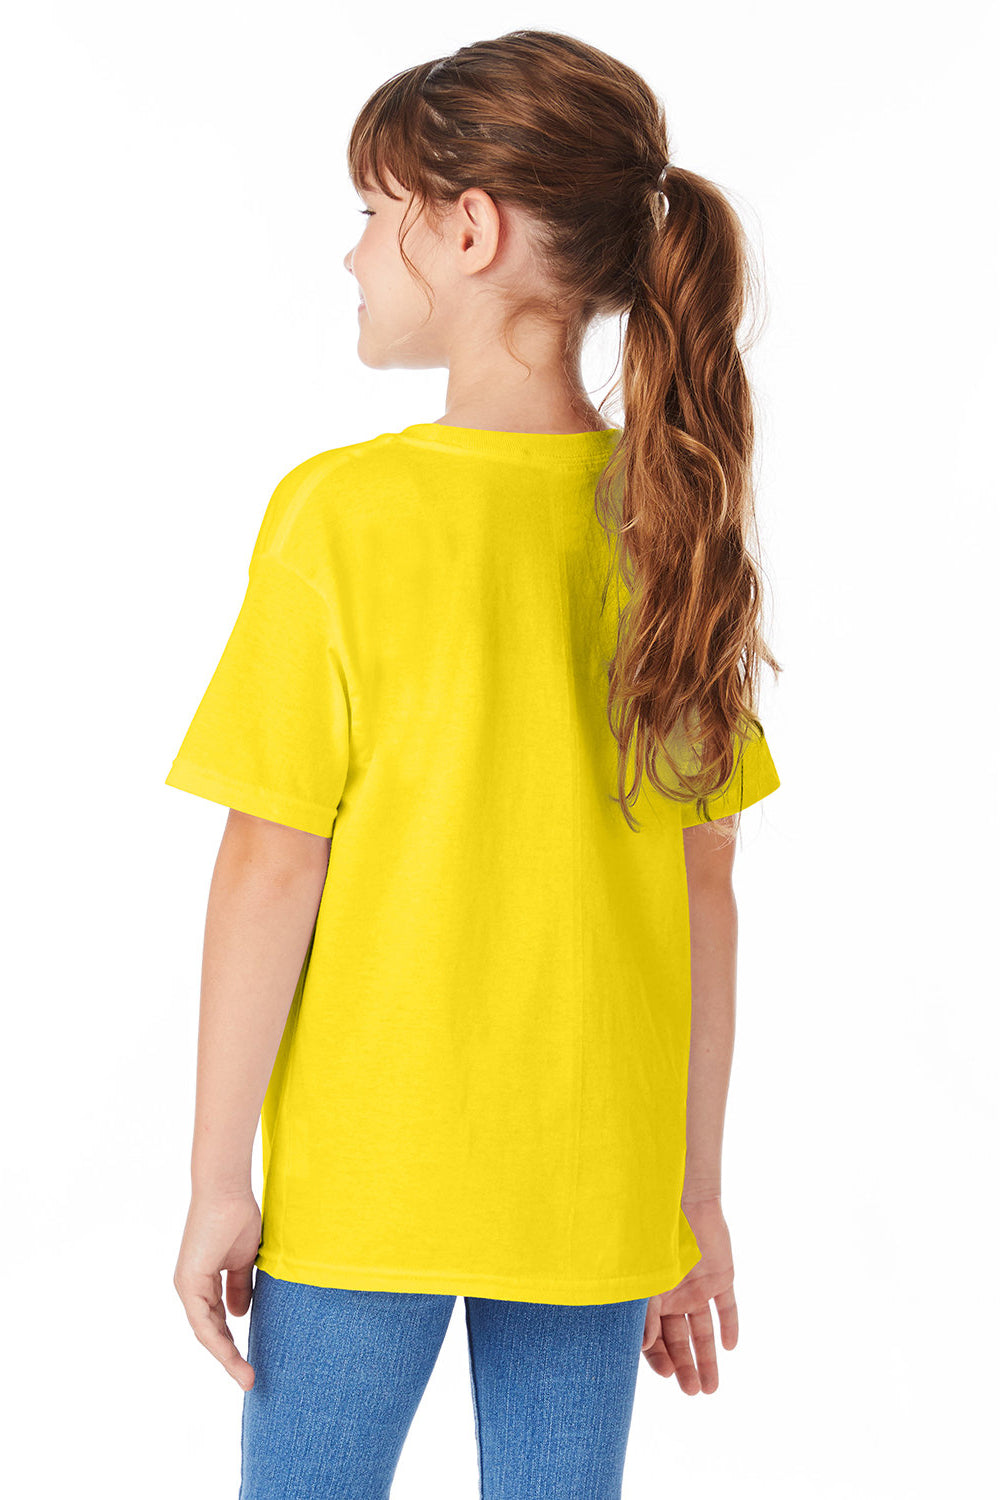 Hanes 5480 Youth ComfortSoft Short Sleeve Crewneck T-Shirt Athletic Yellow Back